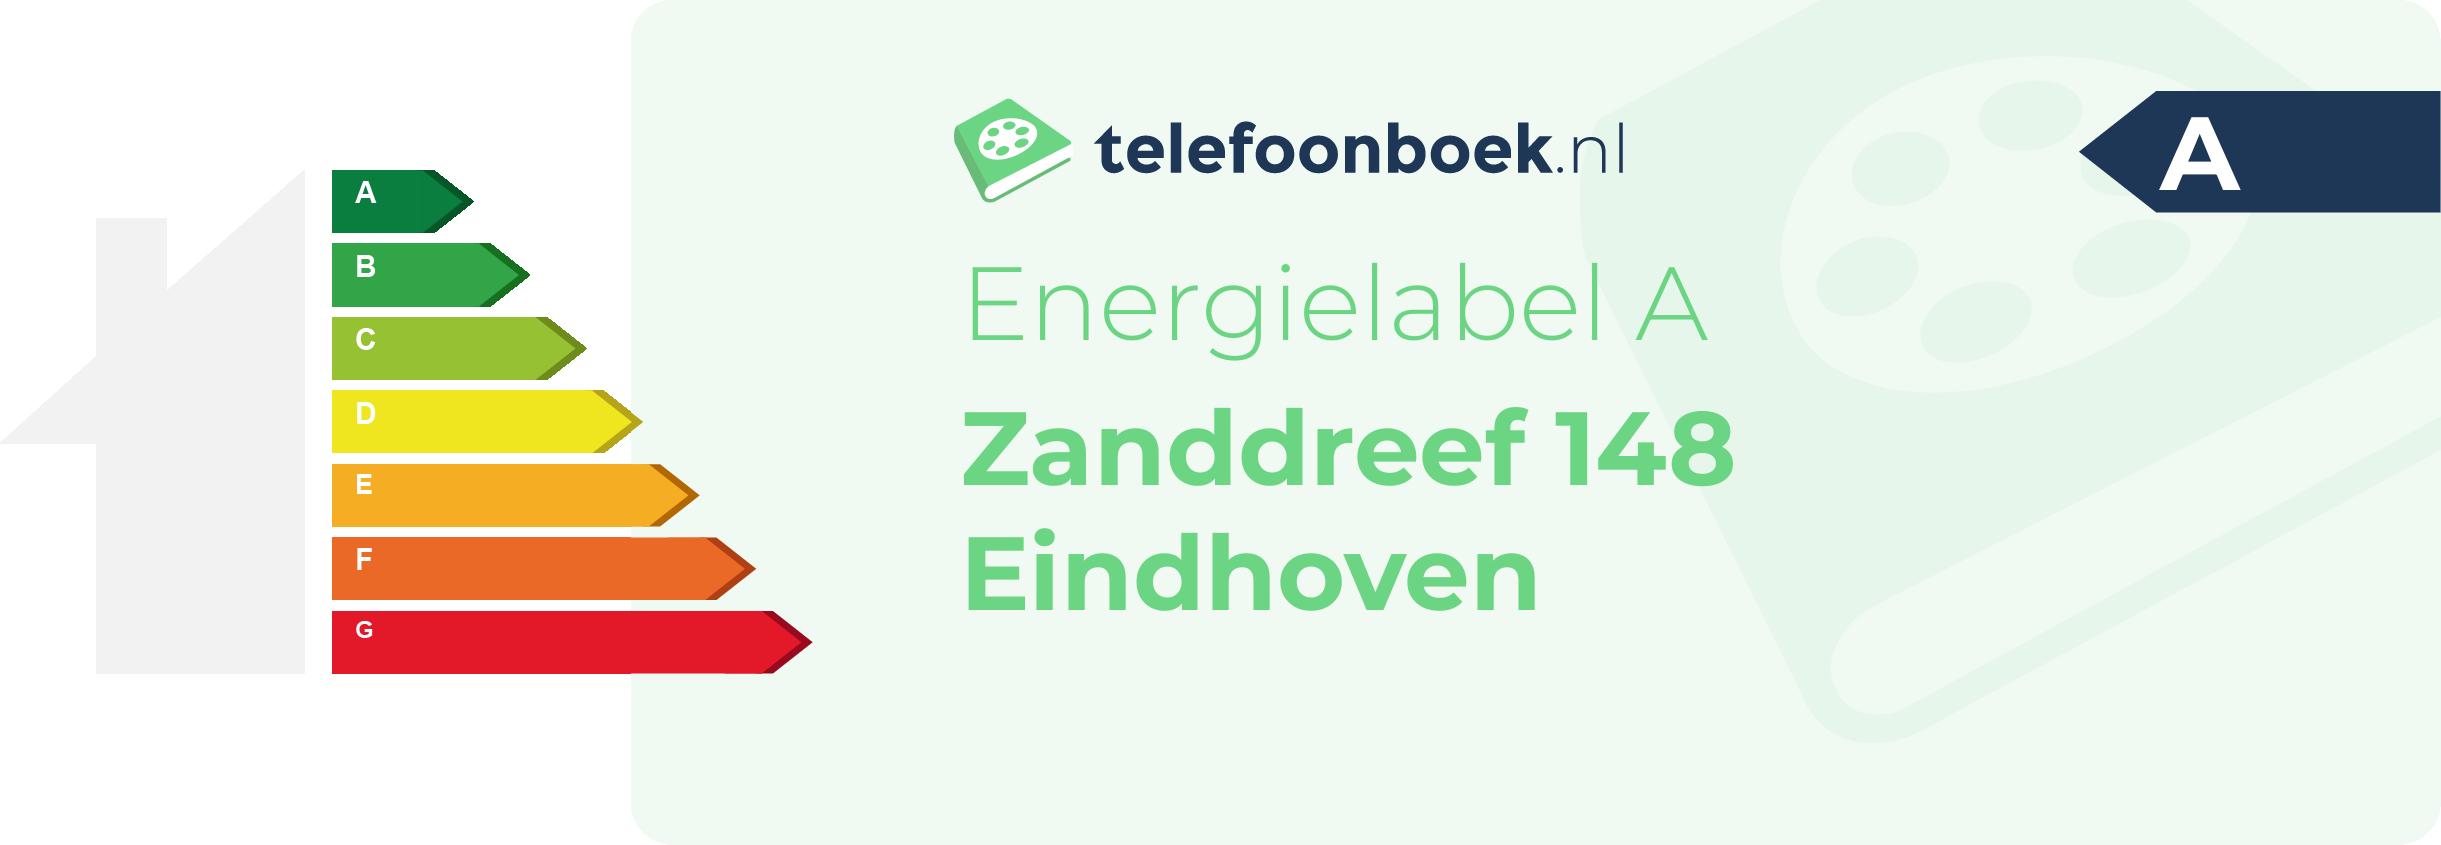 Energielabel Zanddreef 148 Eindhoven